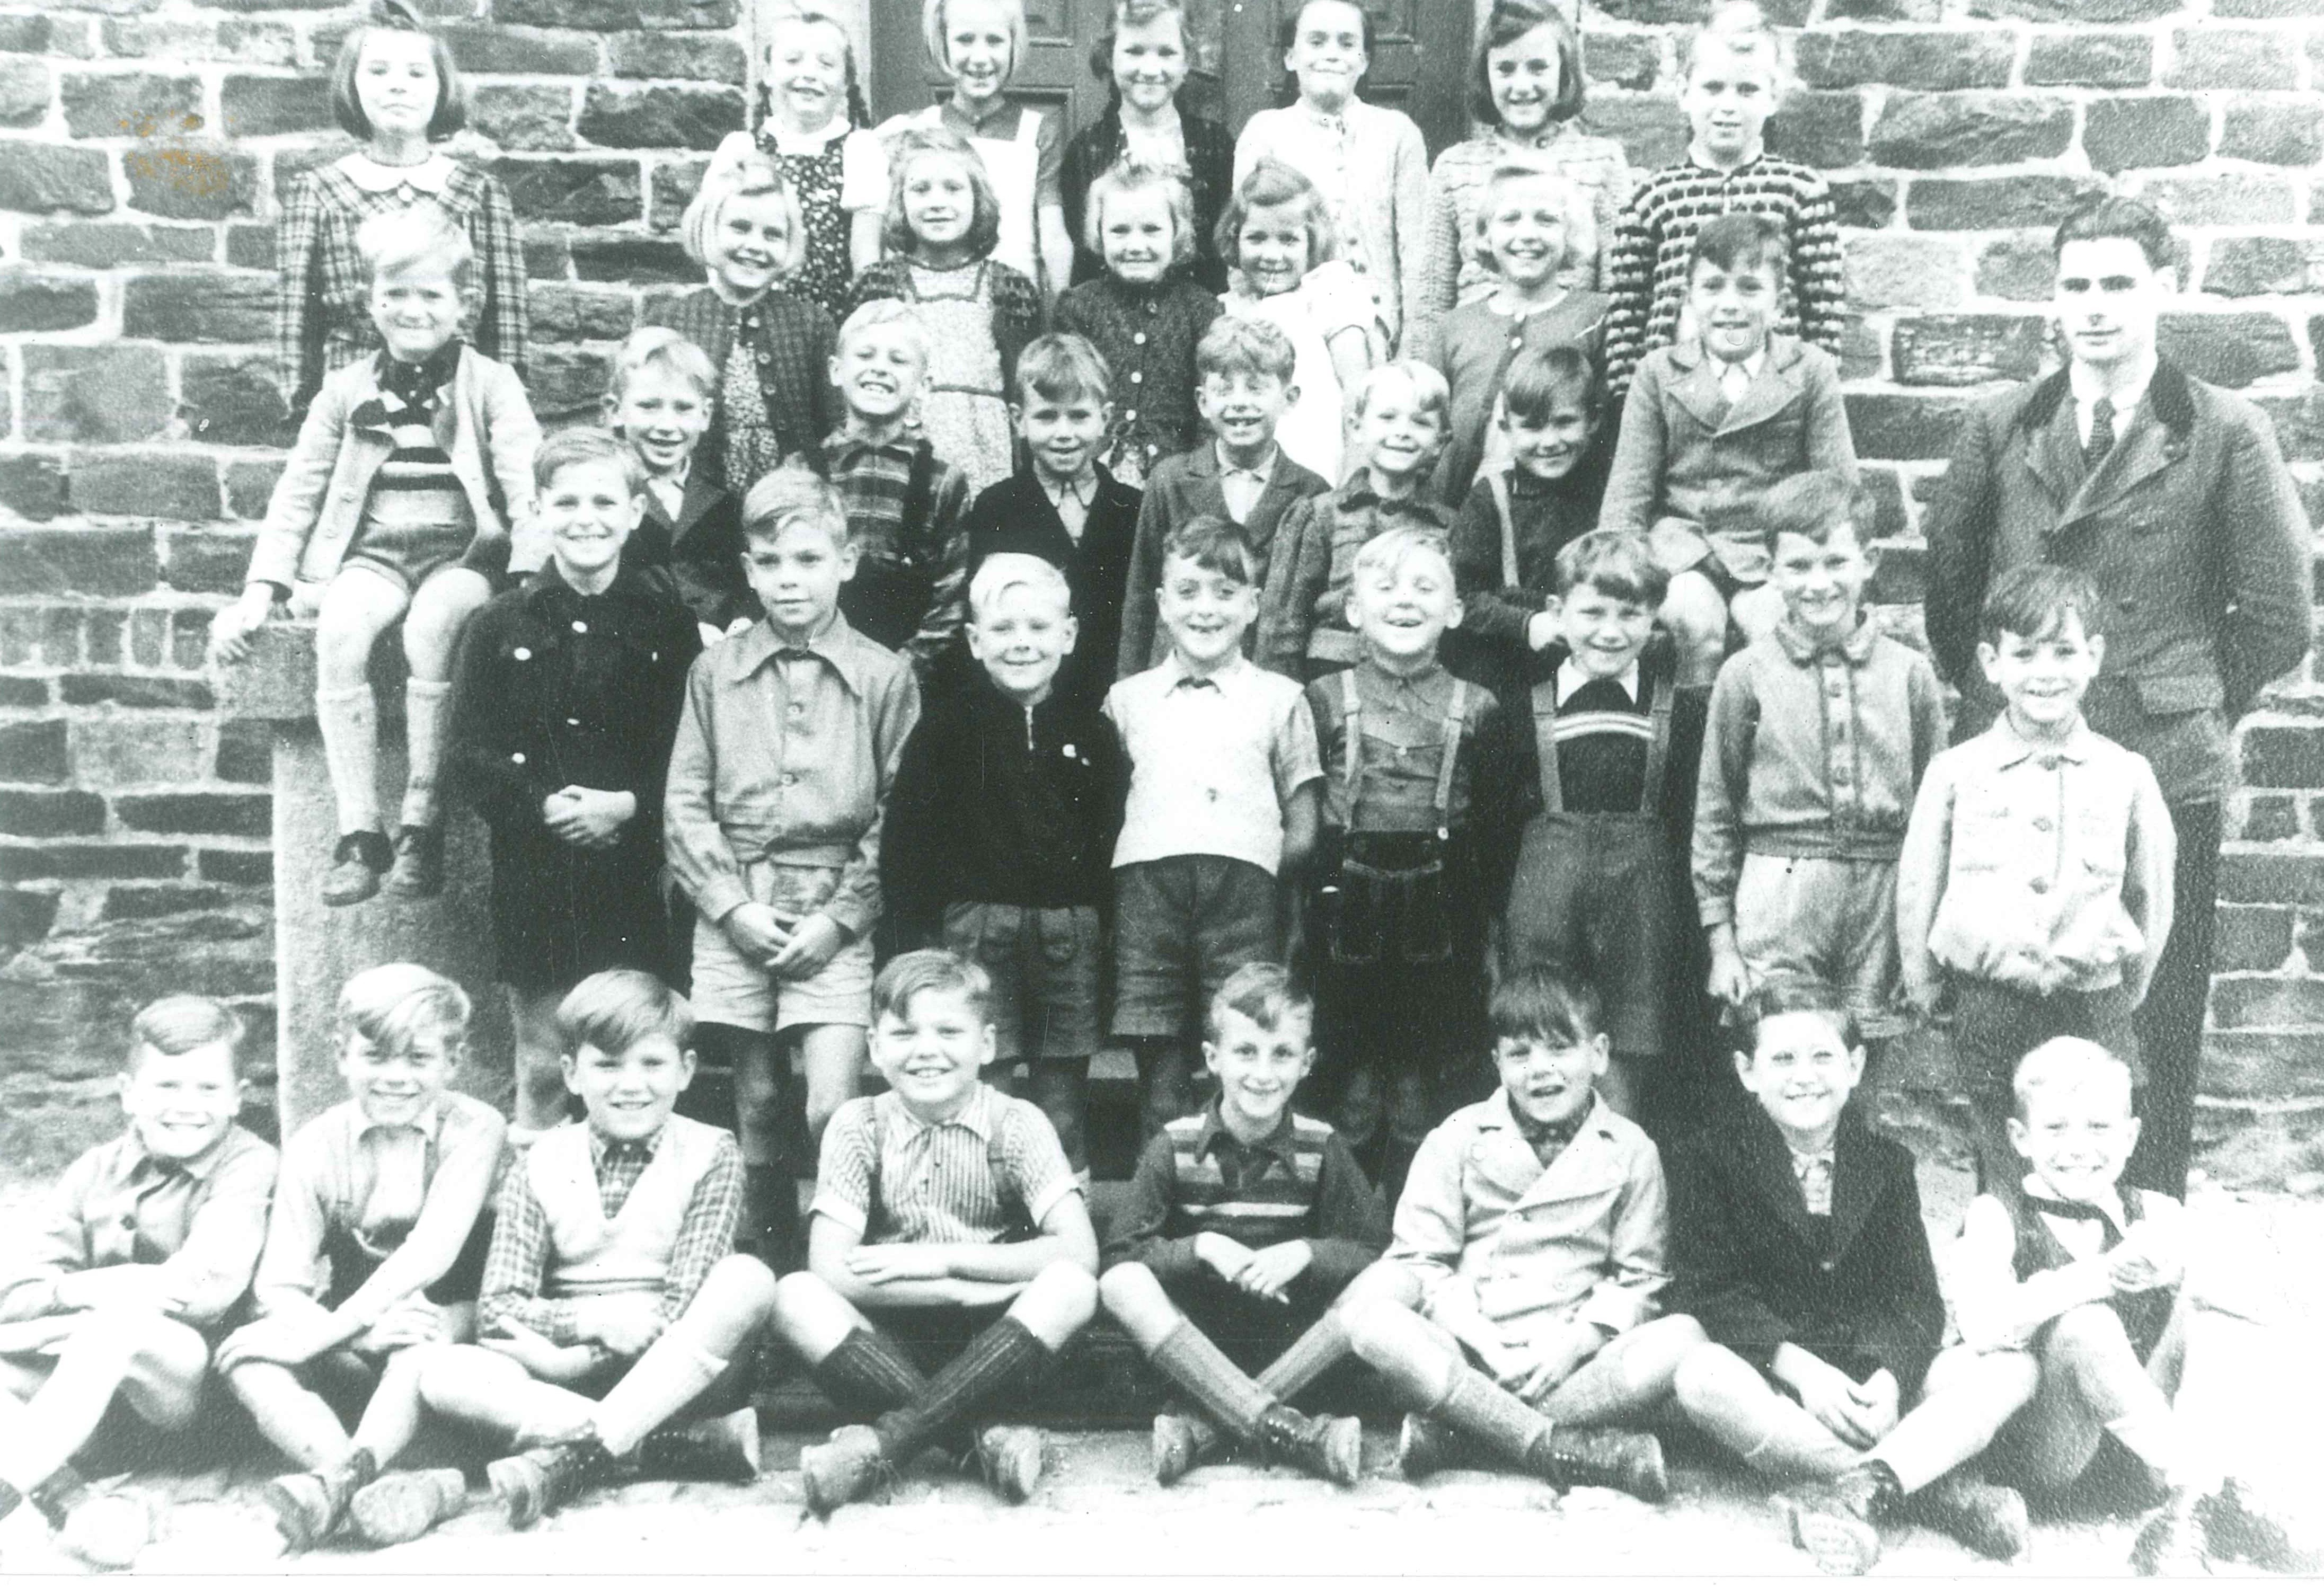 Klassenfoto, katholische Schule "Schönblick", Bendorf-Stromberg, 1947 (REM CC BY-NC-SA)